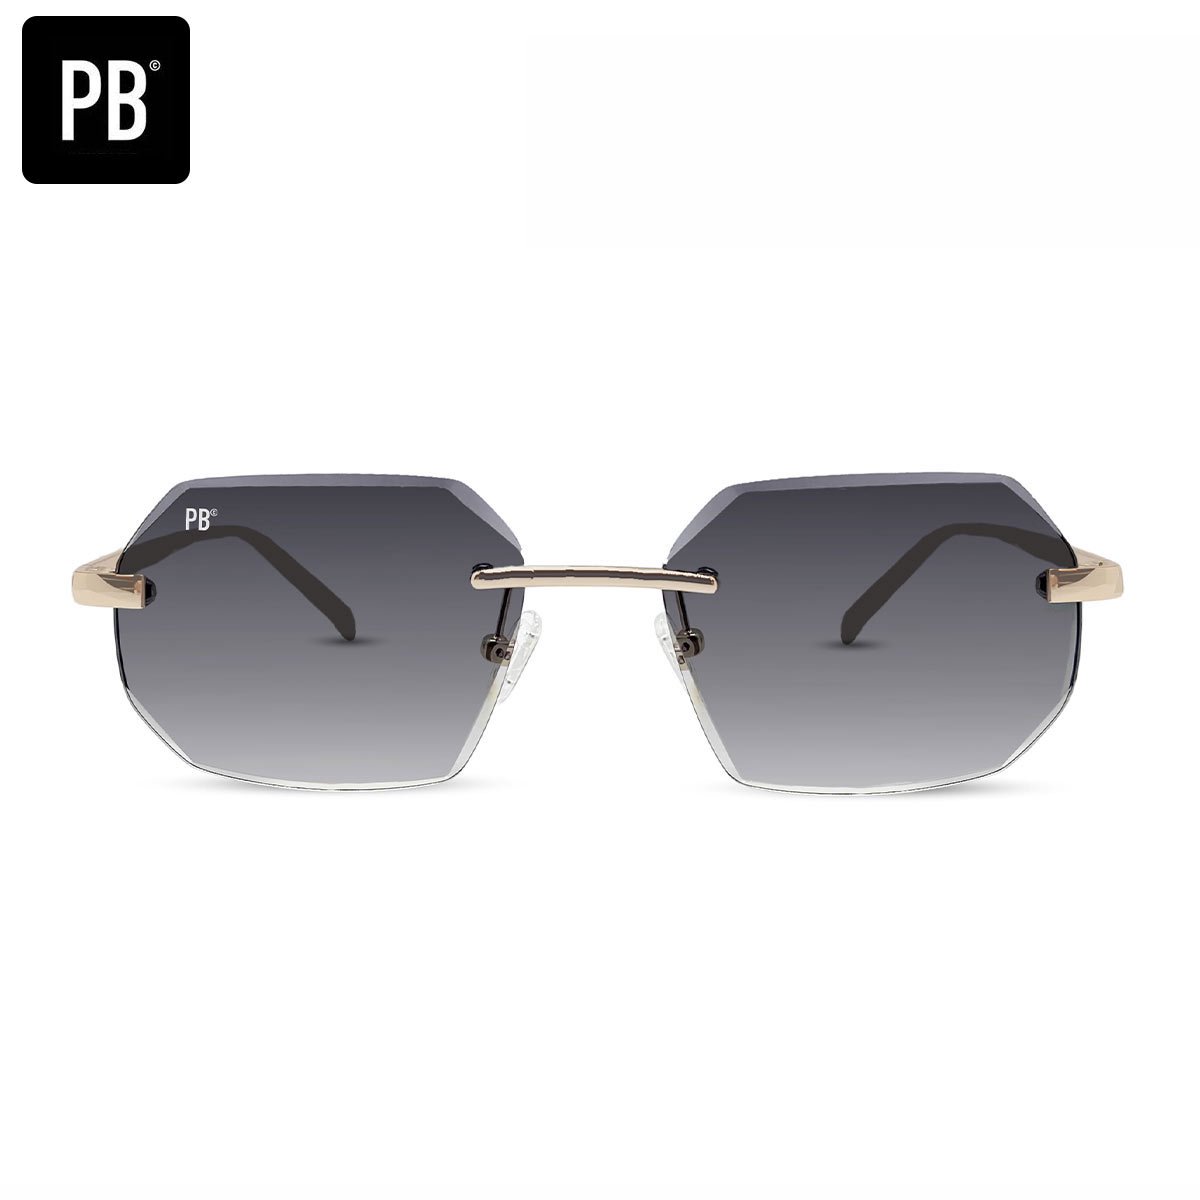 PB Sunglasses - Sierra Gradient Grey. - Zonnebril heren en dames - Premium Diamond Cut - Randloze stijl - Stainless Steel